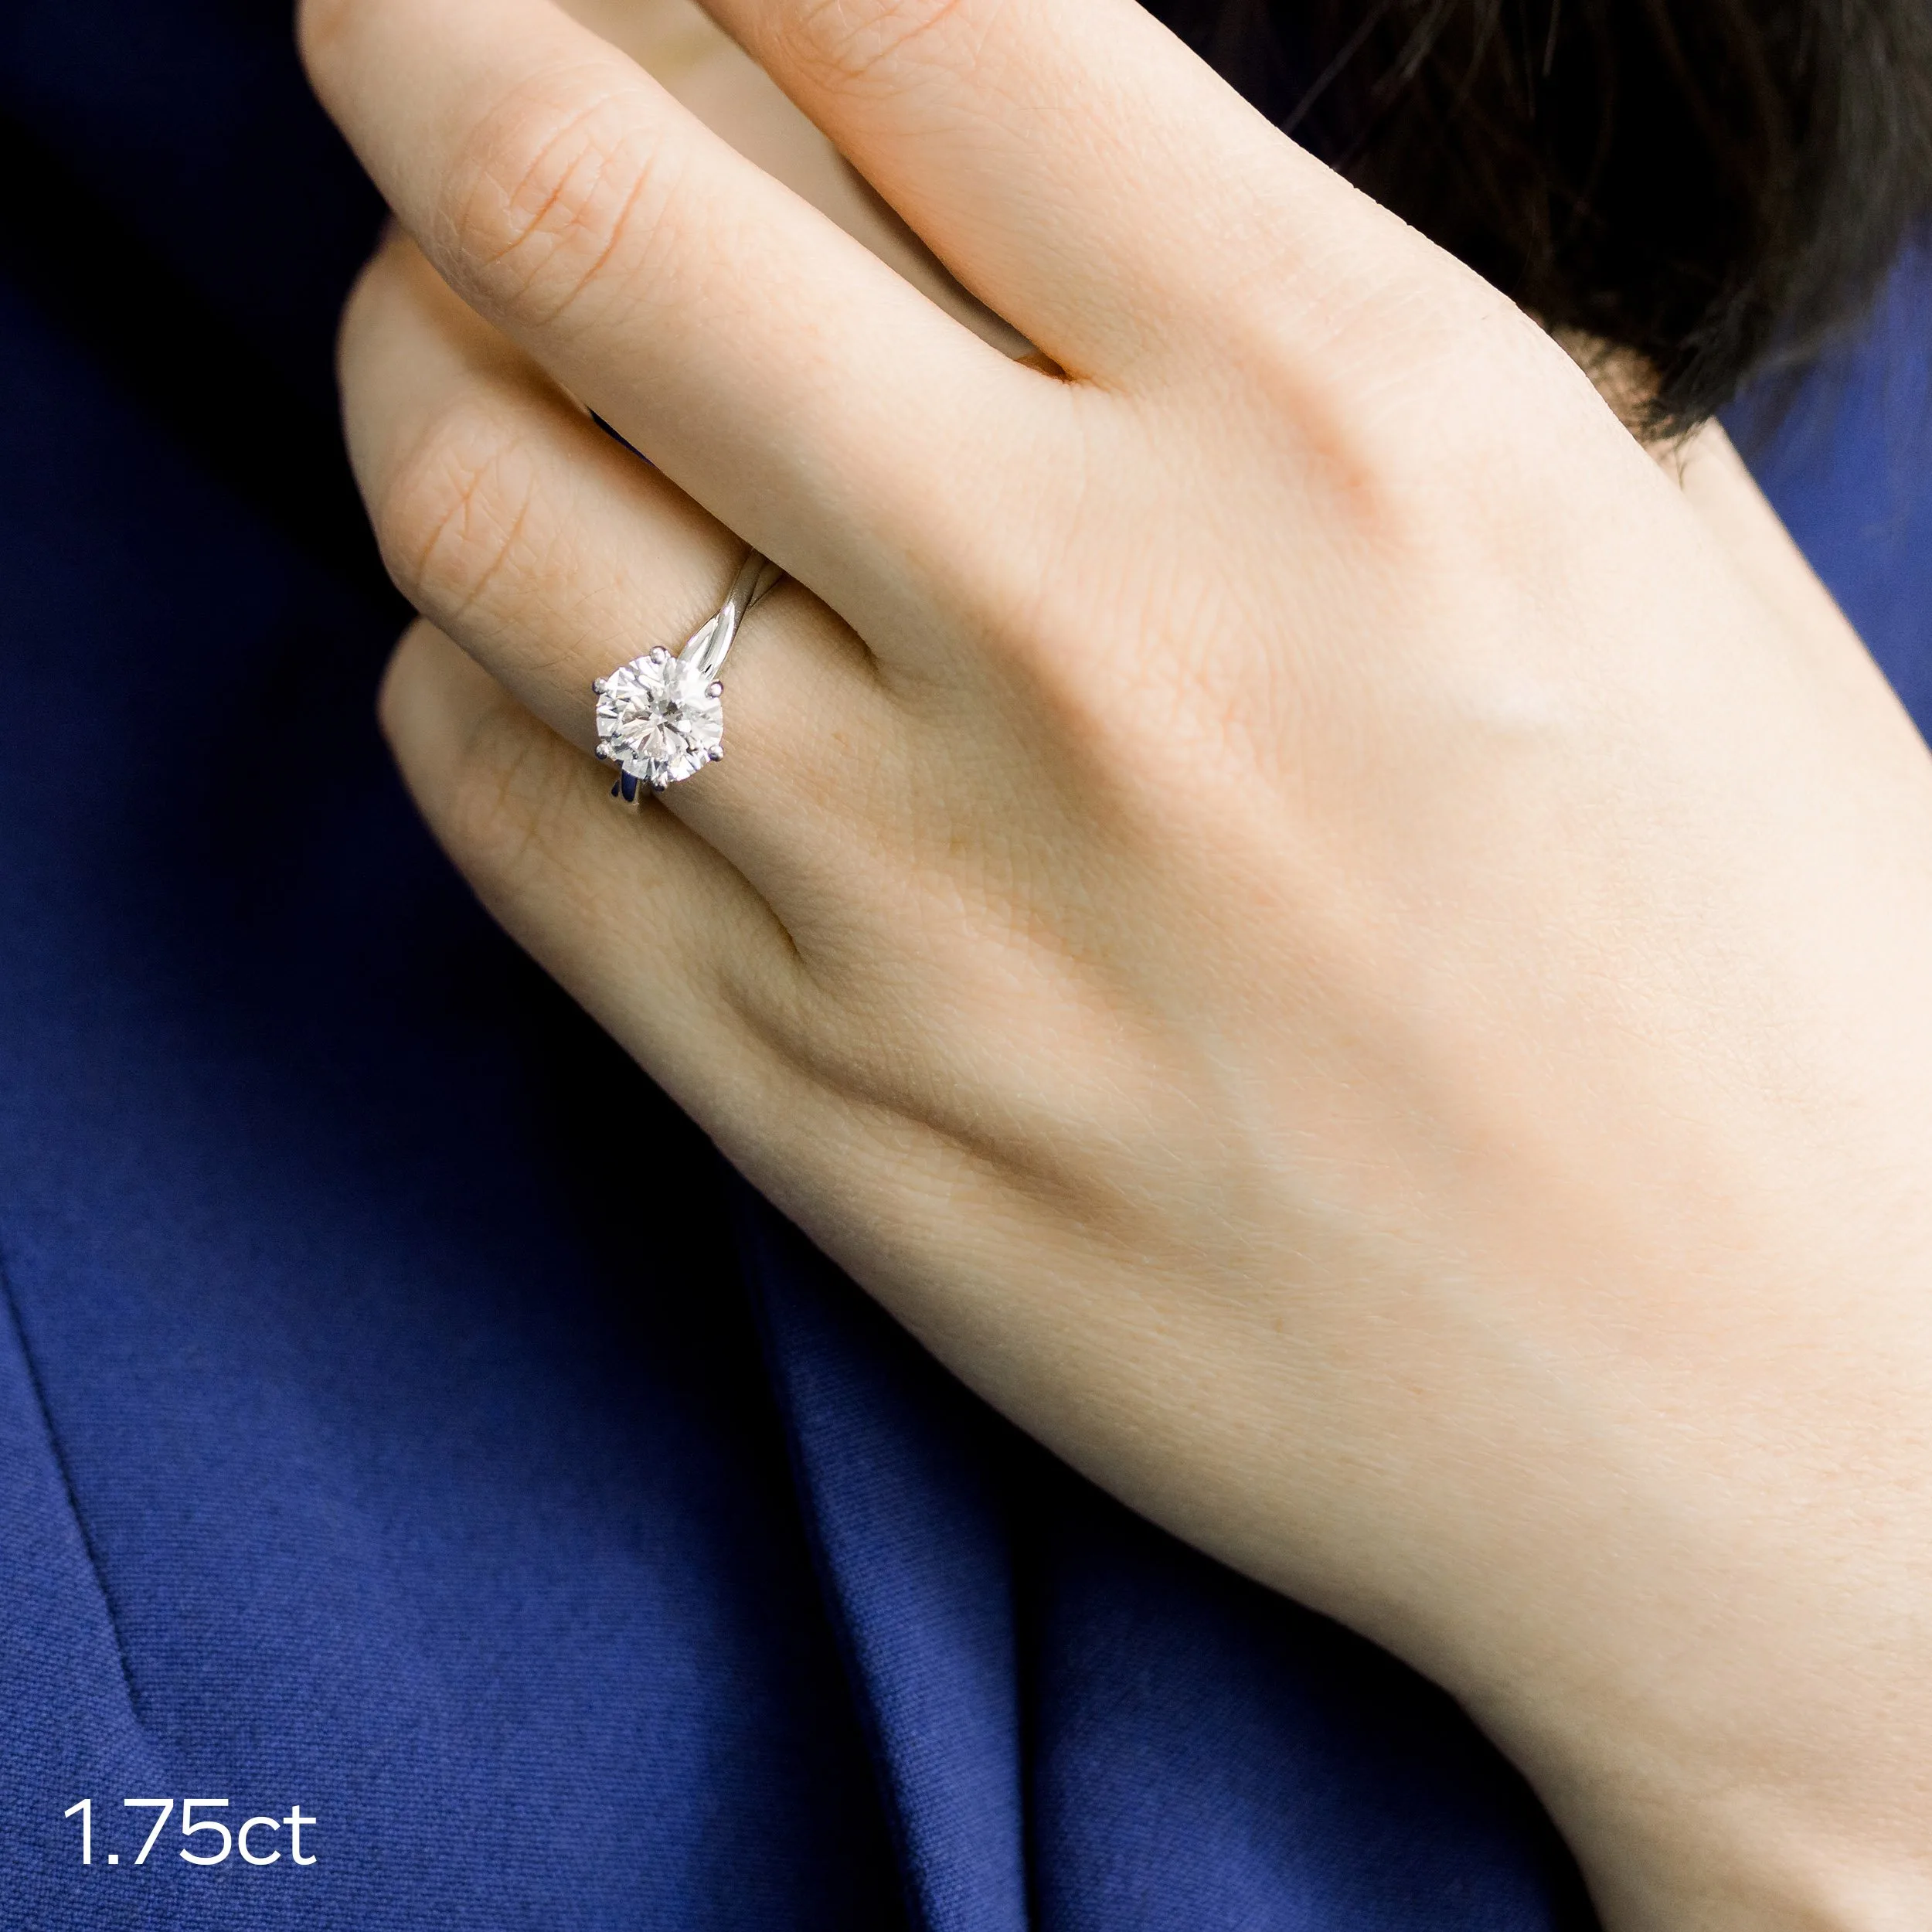 1.75 Carat Lab Diamonds set in Platinum Twisting Band Solitaire Diamond Engagement Ring (Main View)